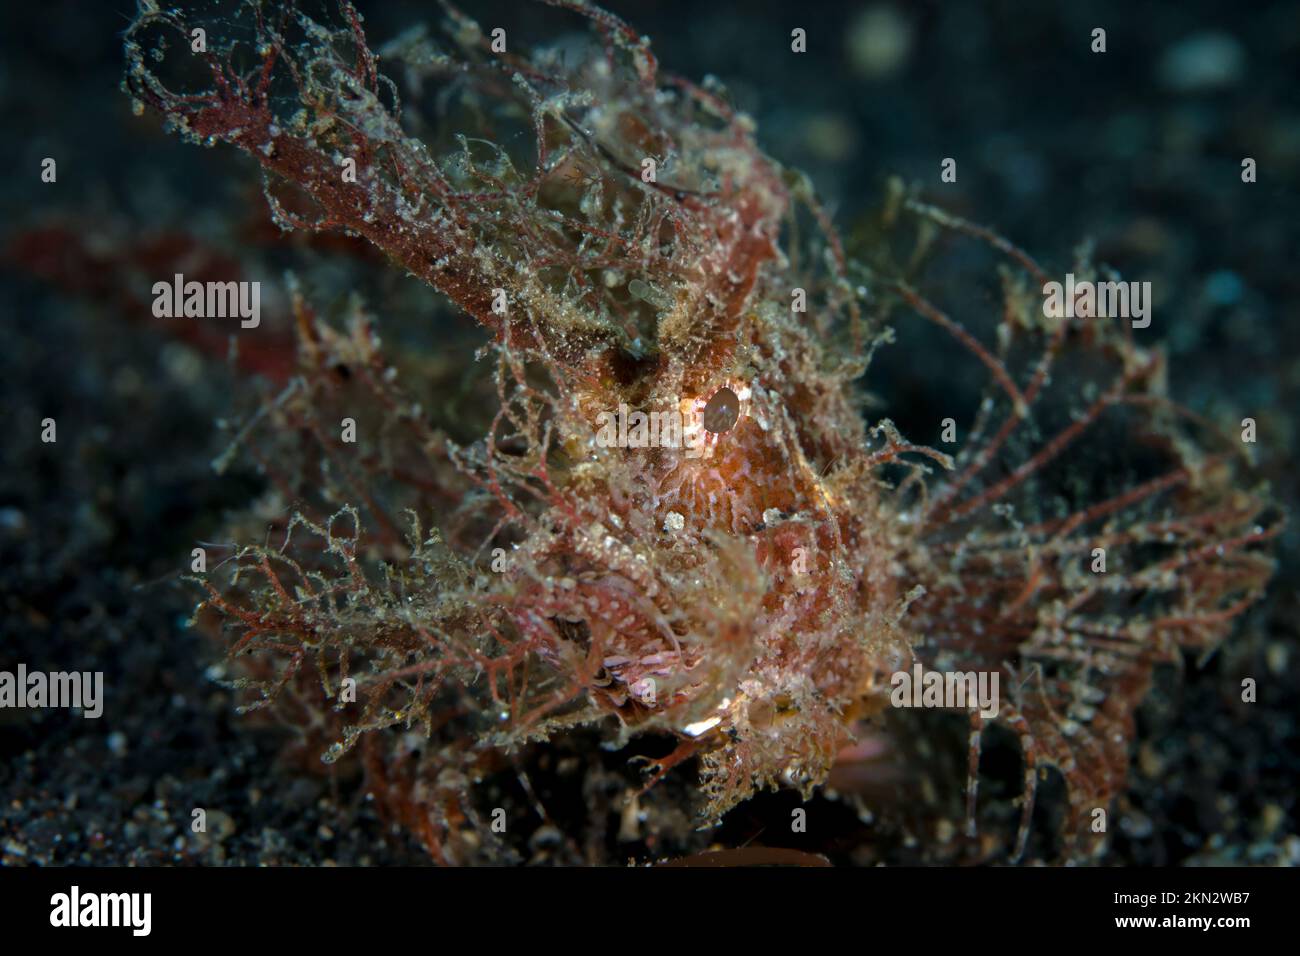 The cryptic Ambon Scorpionfish - Pteroidichthys amboinensis Stock Photo